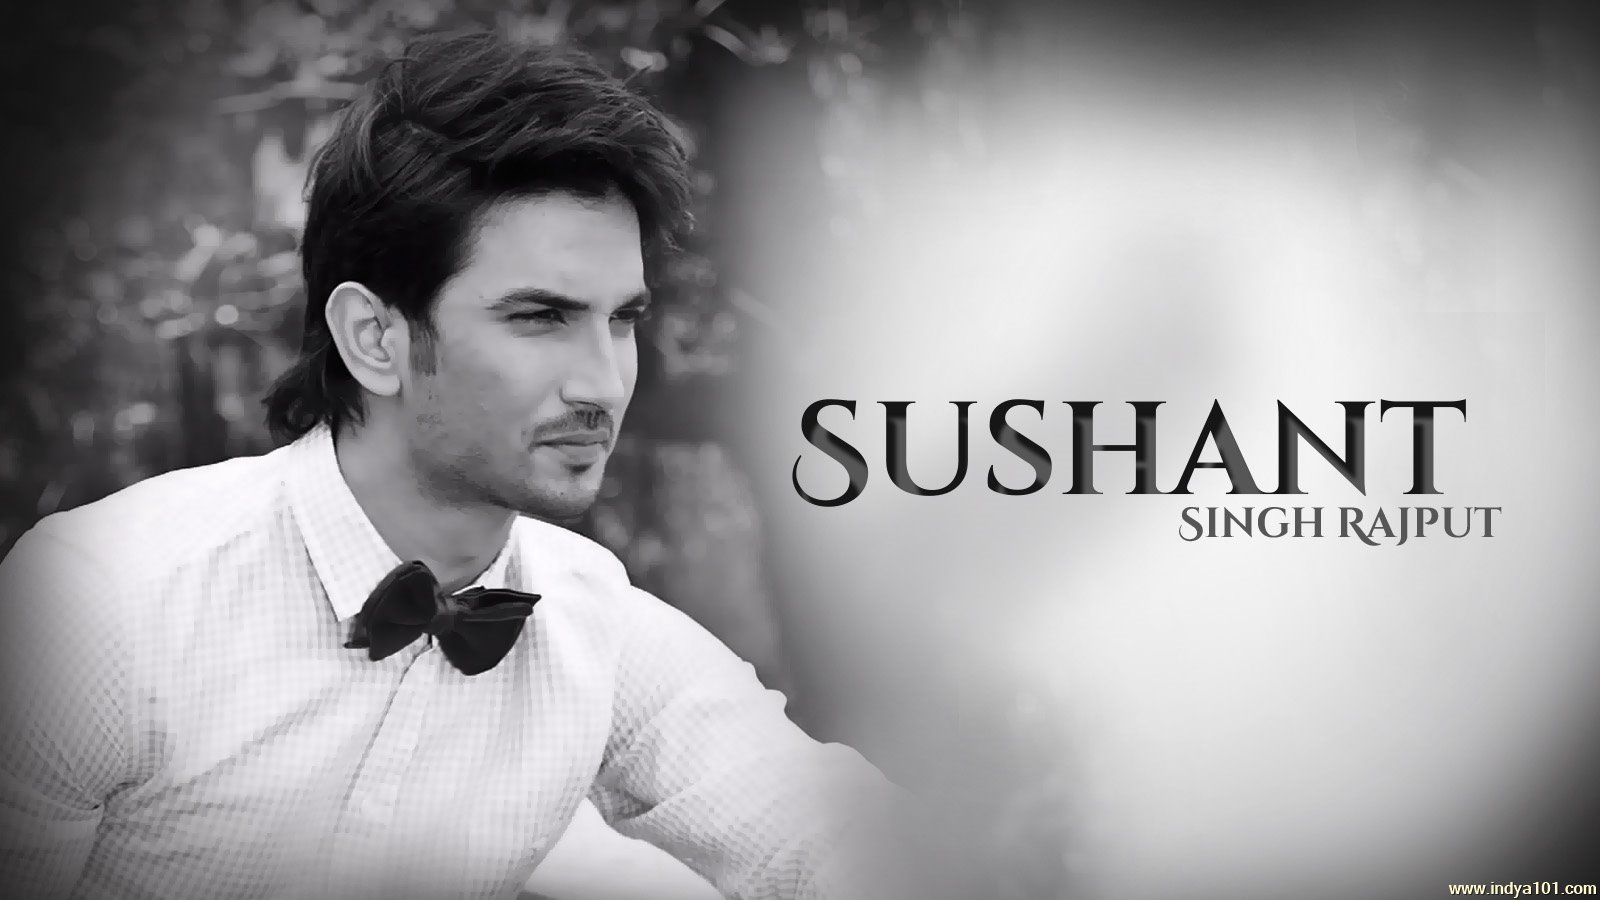 sushant singh rajput hd wallpaper,font,suit,formal wear,photography,white collar worker